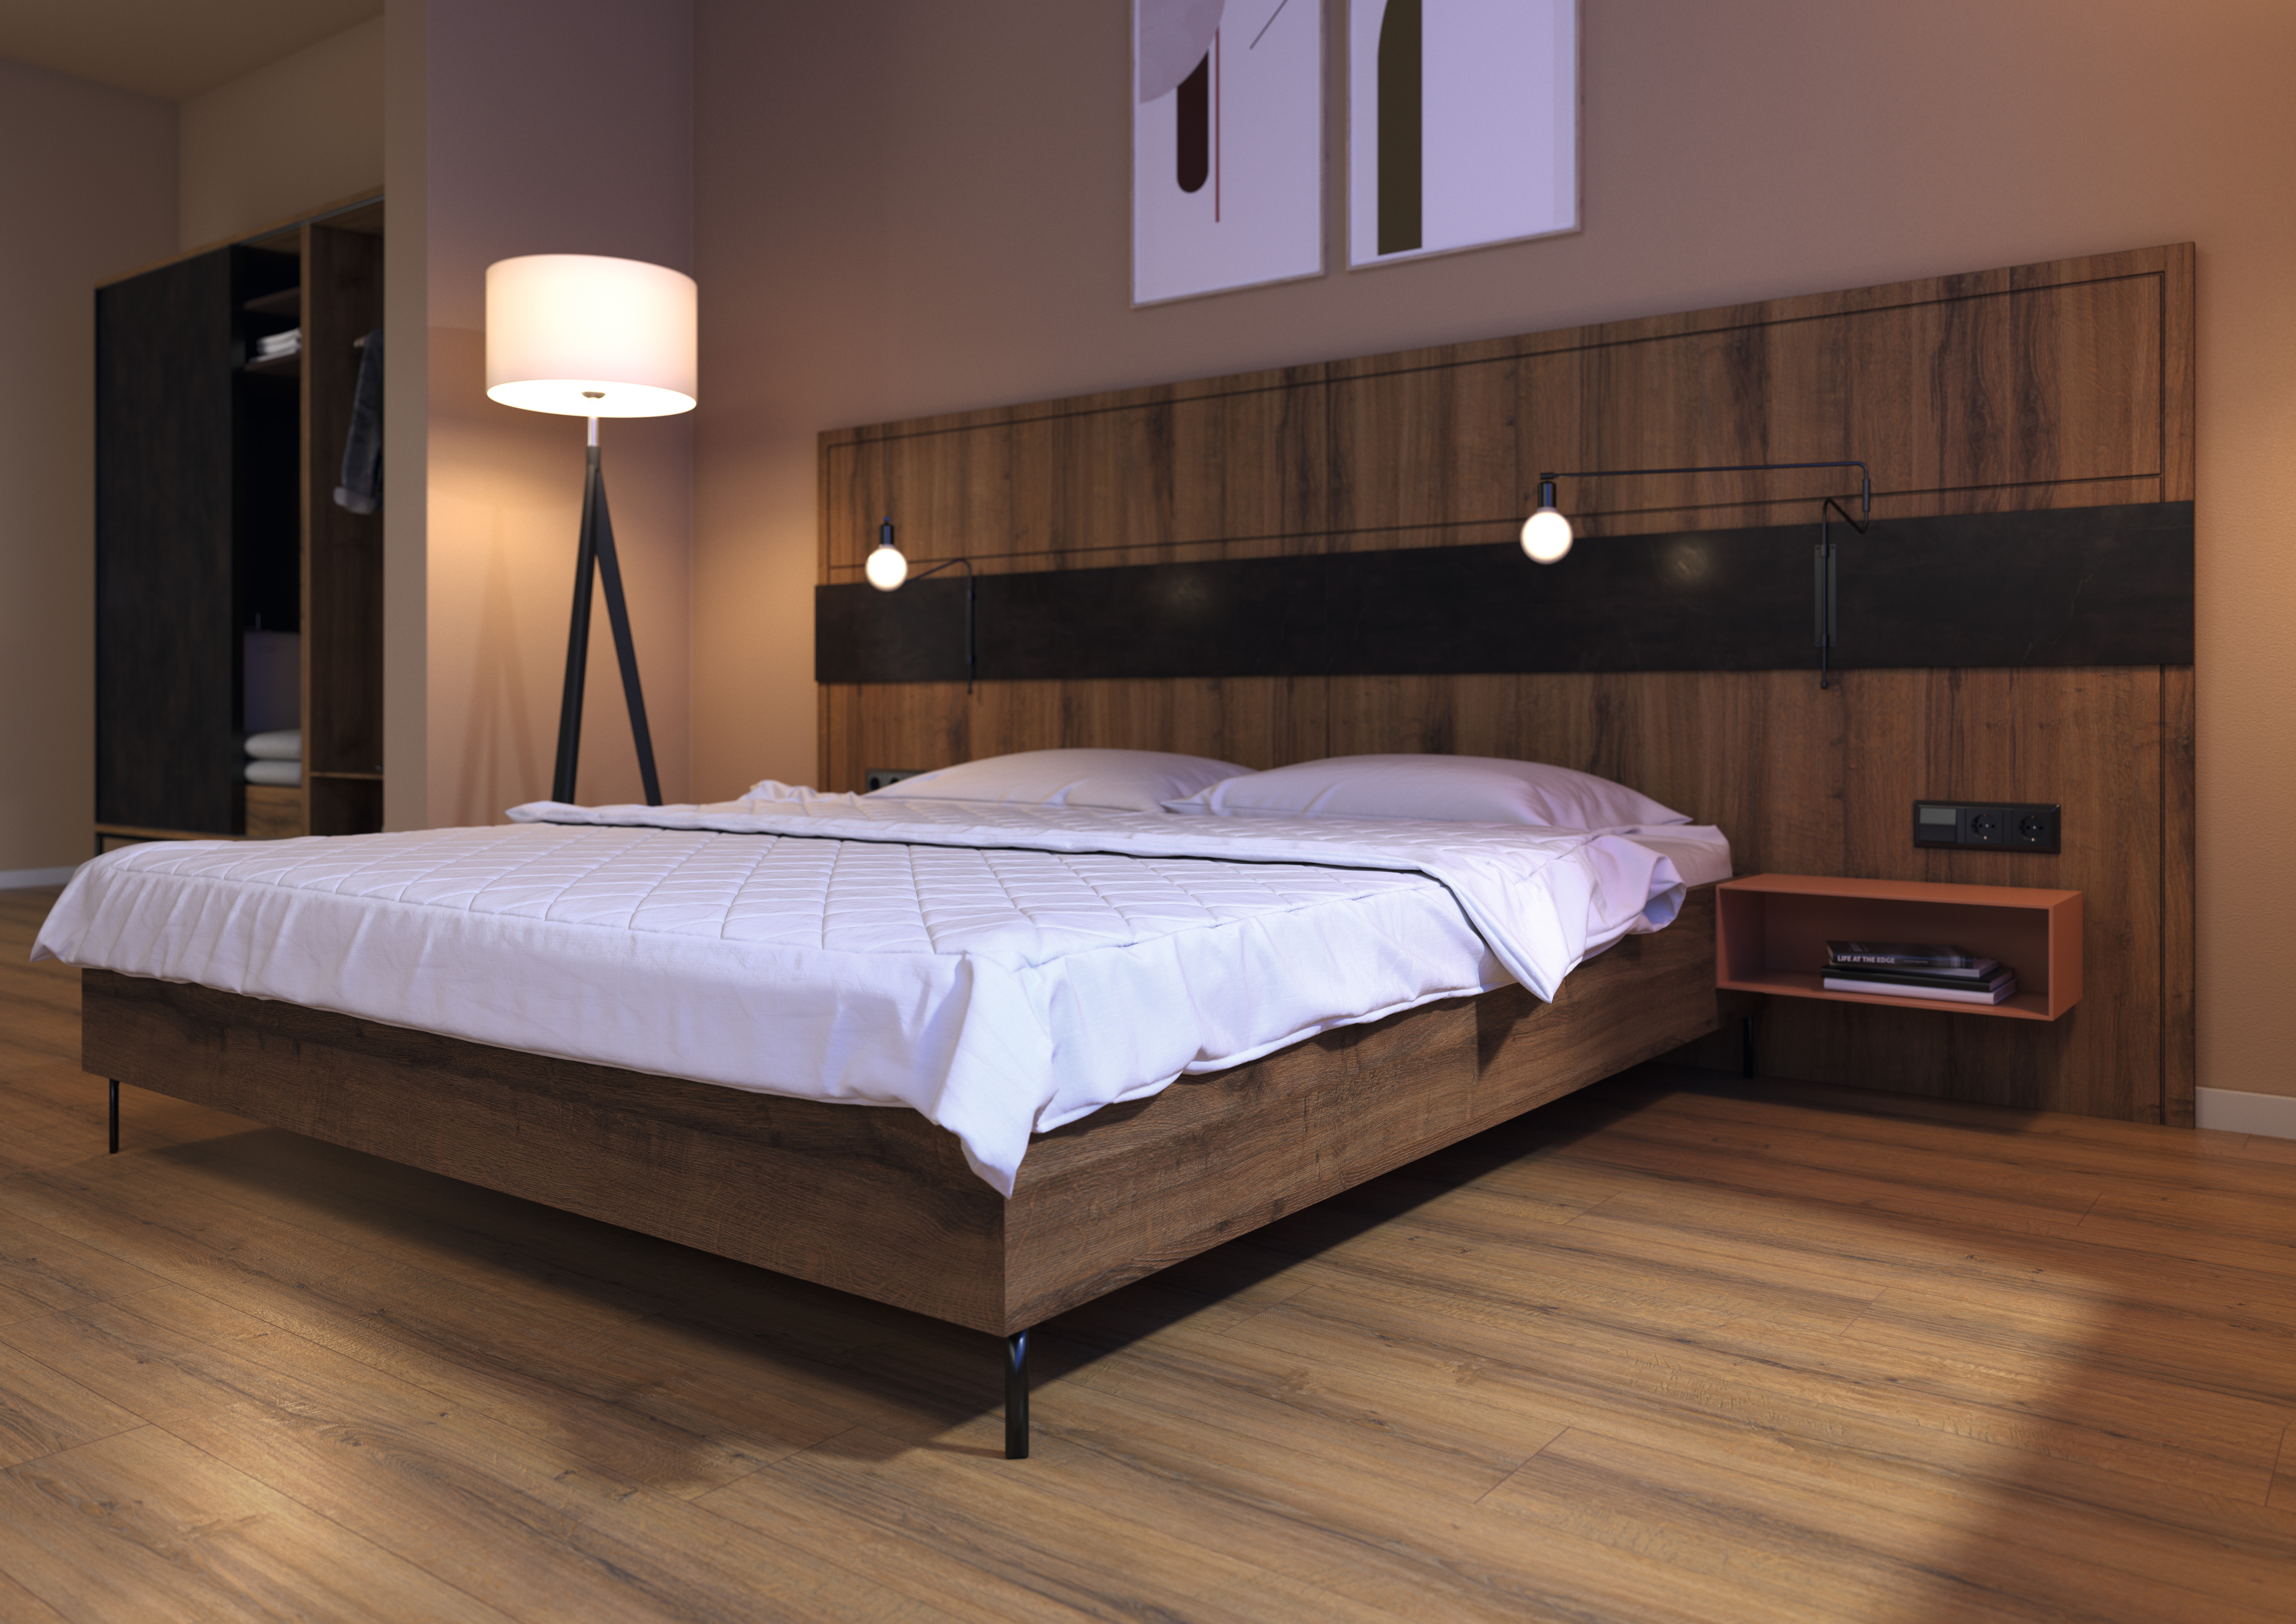 Decor Match bedroom: Cognac Brown Sherman Oak. Bed rear wall: Eurodekor MDF | Bed base: Eurodekor chipboard | Flooring: Laminate Flooring Aqua+